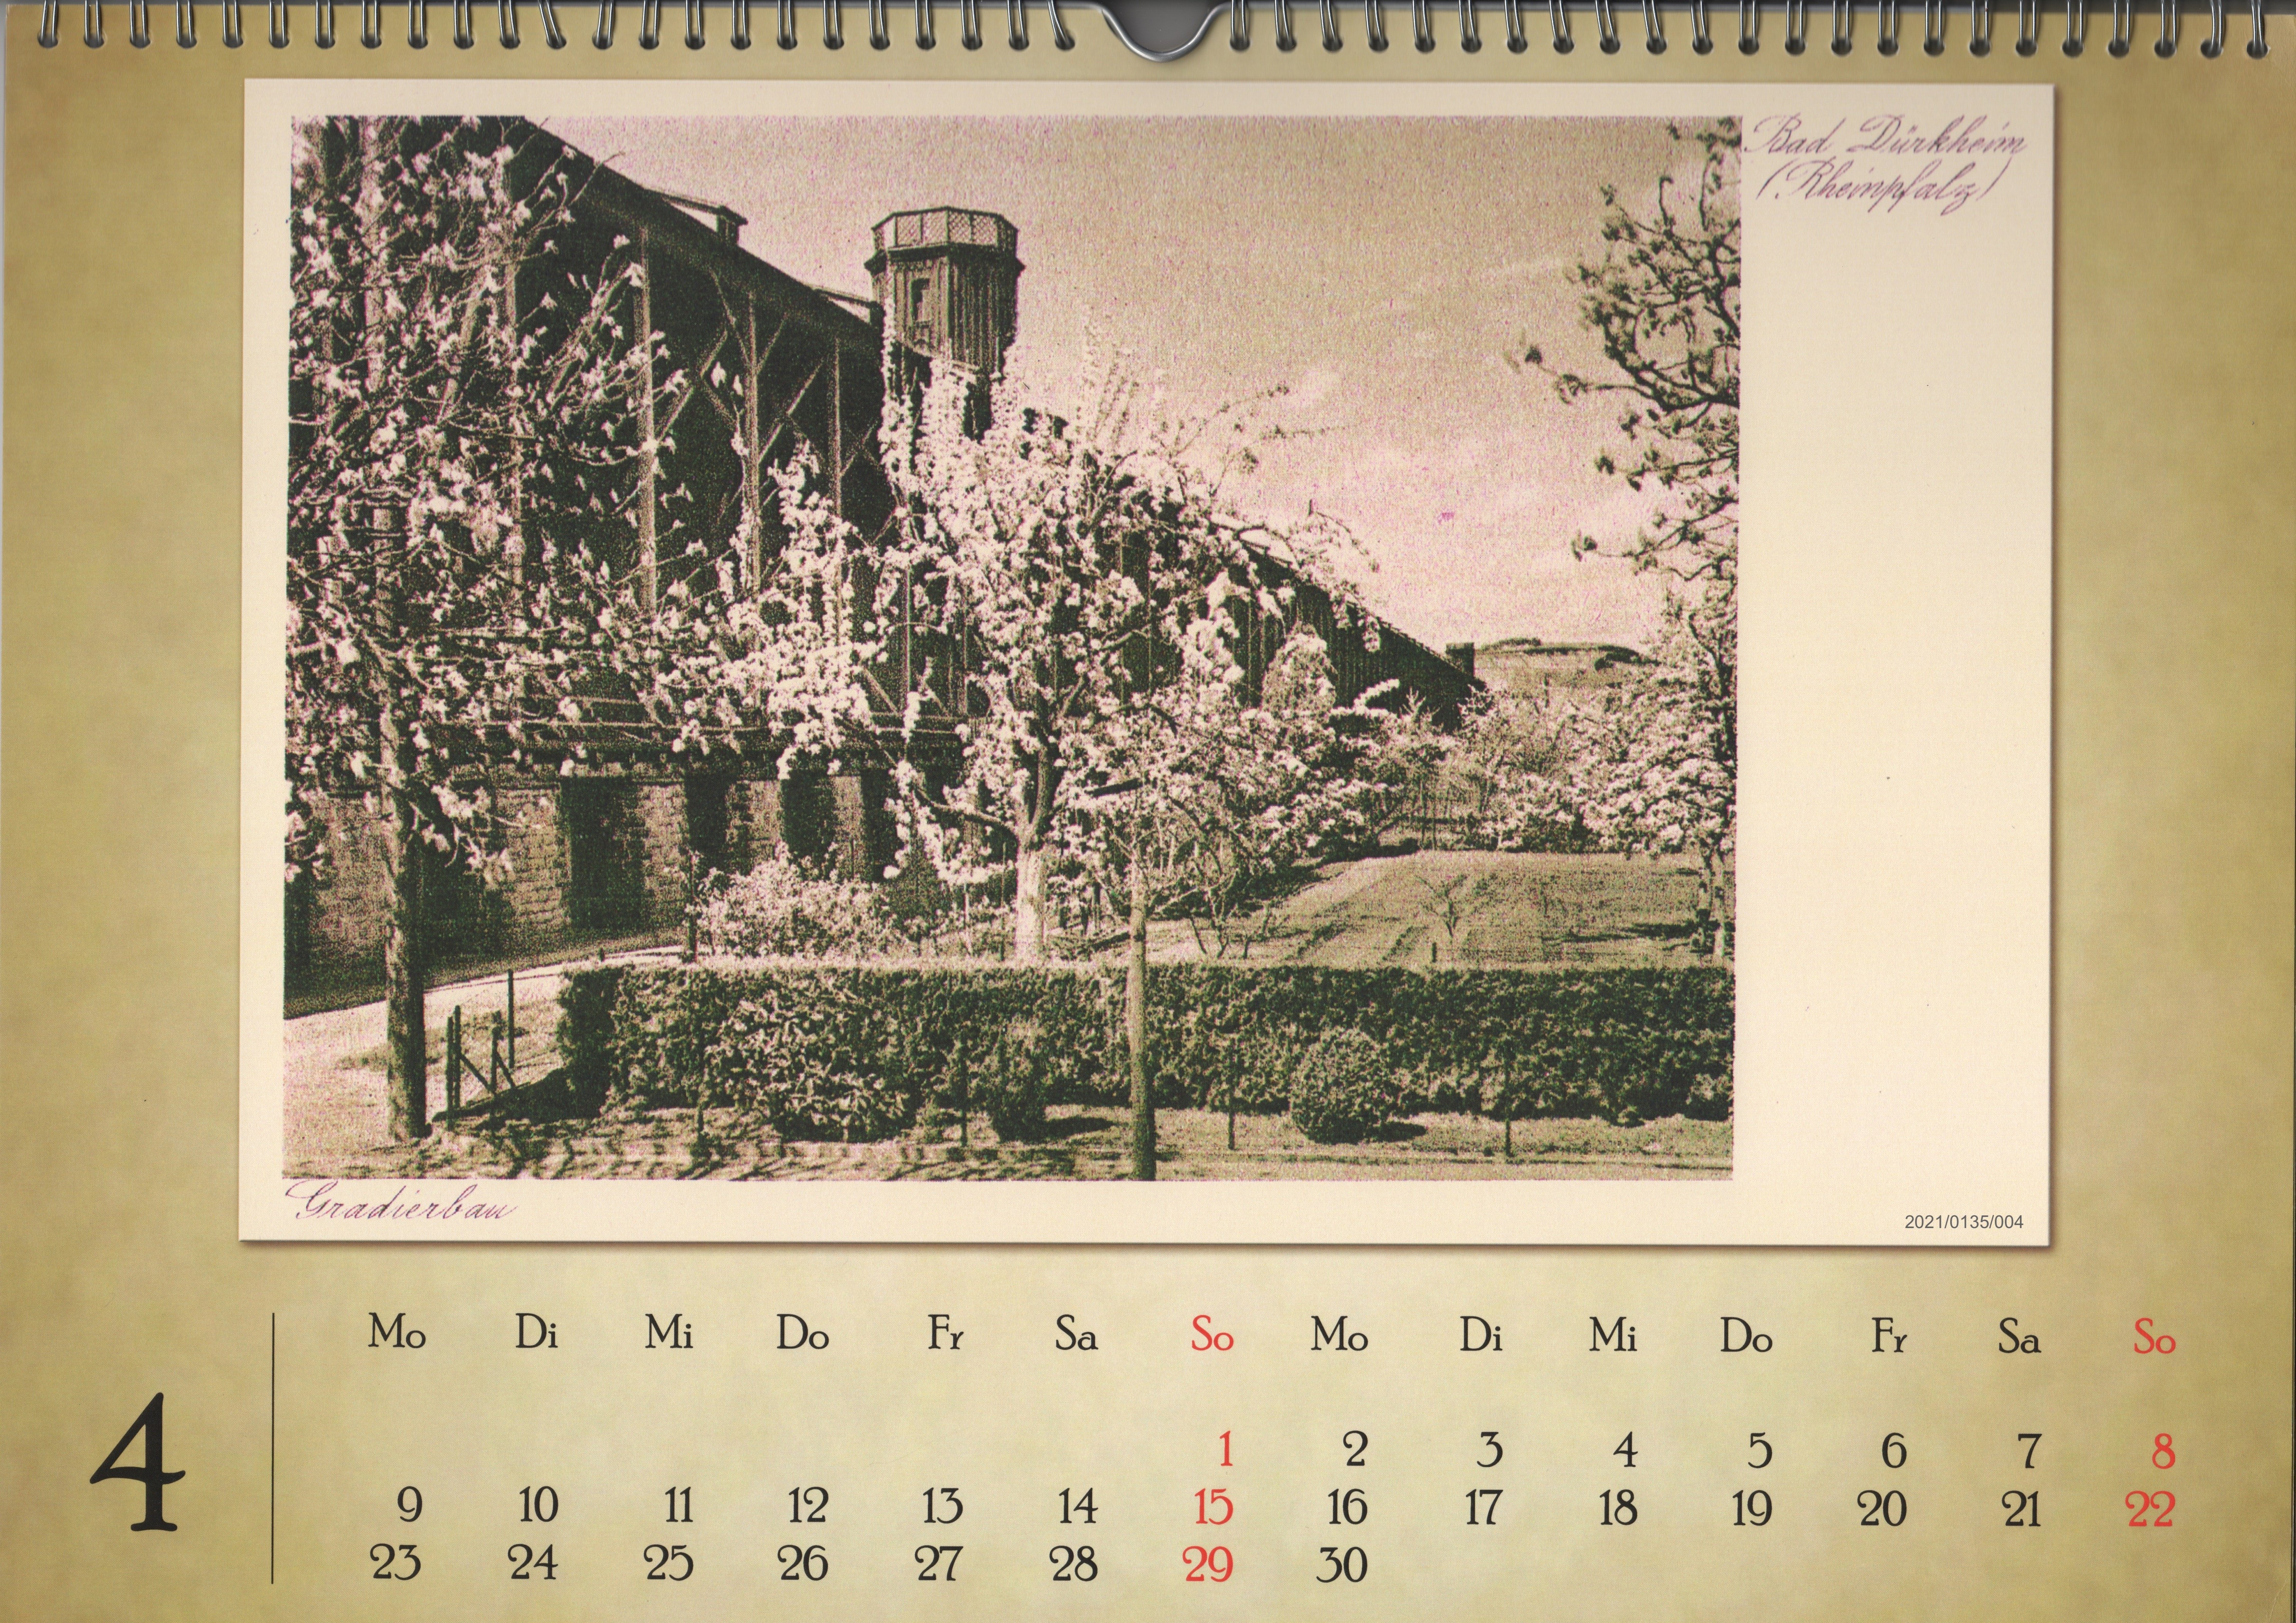 Unser Gradierbau Kalender 2012: Monat April (Museumsgesellschaft Bad Dürkheim e. V. CC BY-NC-SA)